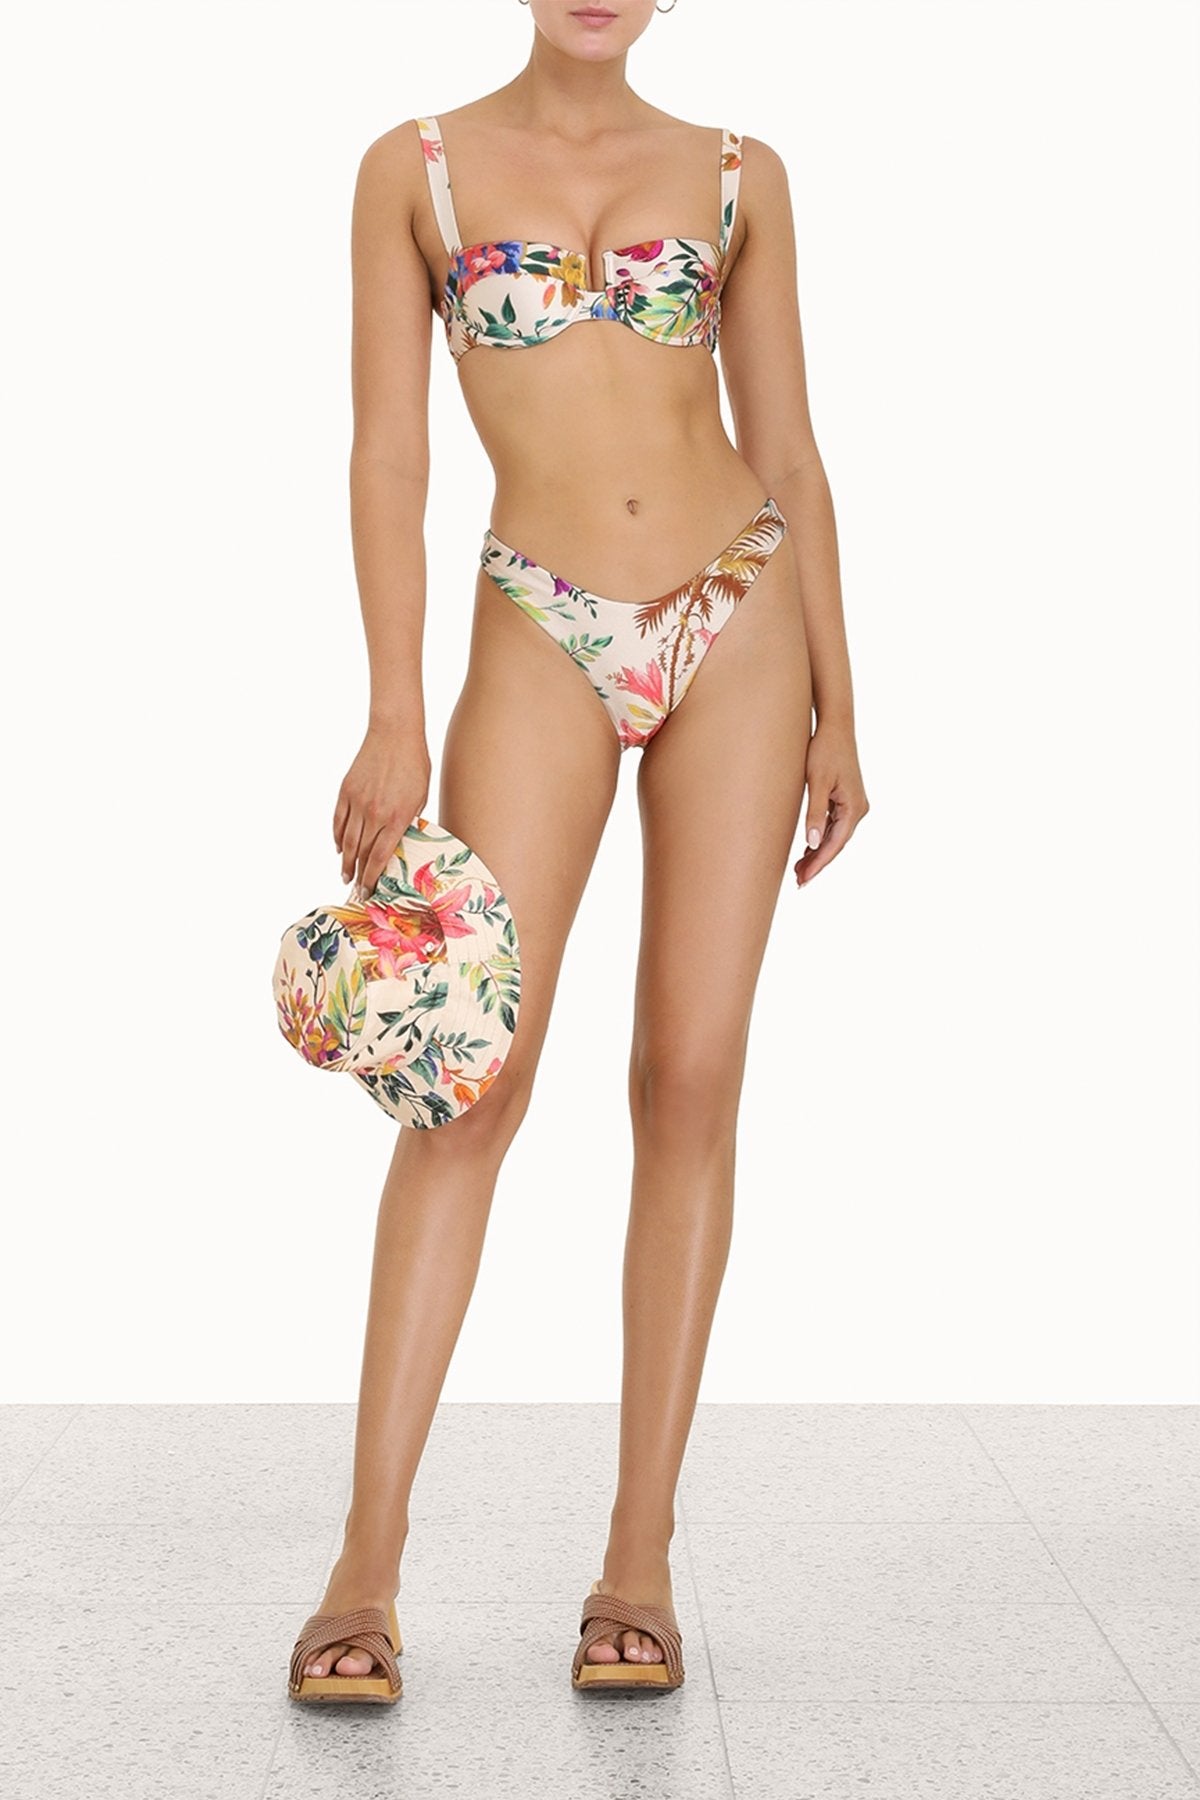 Tropicana Balconette Bikini Bra Top in Cream Floral - shop-olivia.com